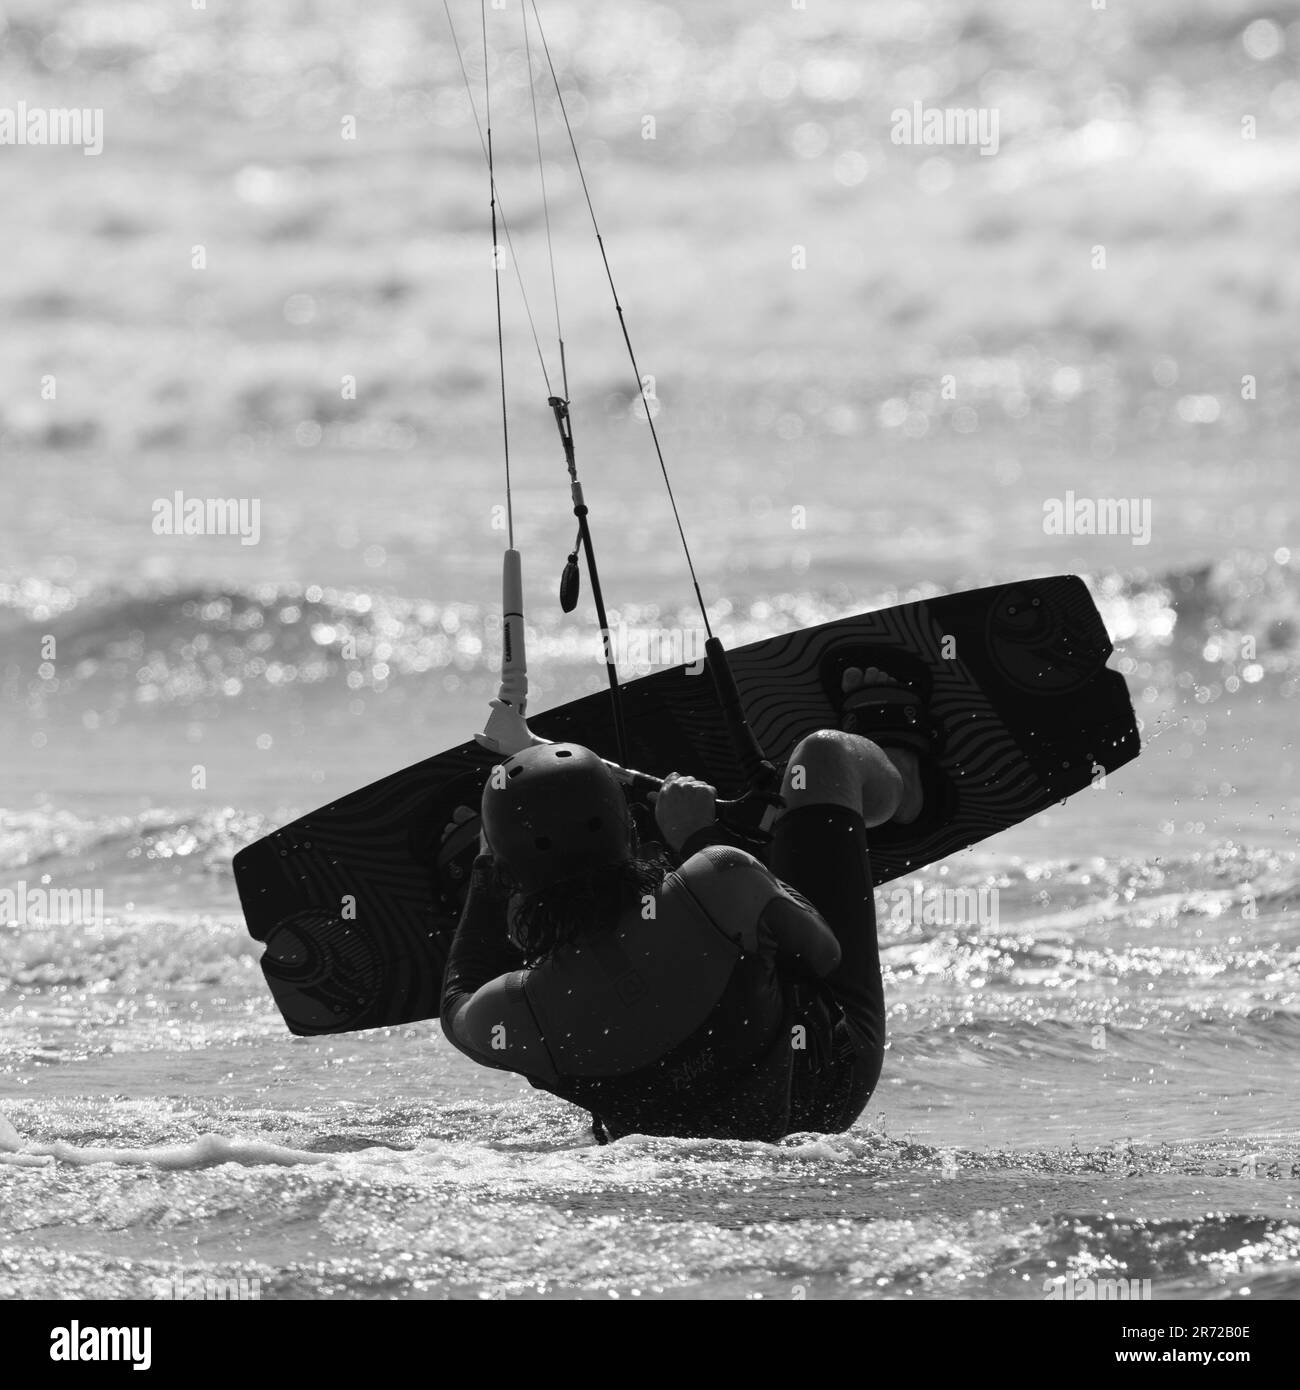 Kite surfer in azione a Westward ho, North Devon Foto Stock